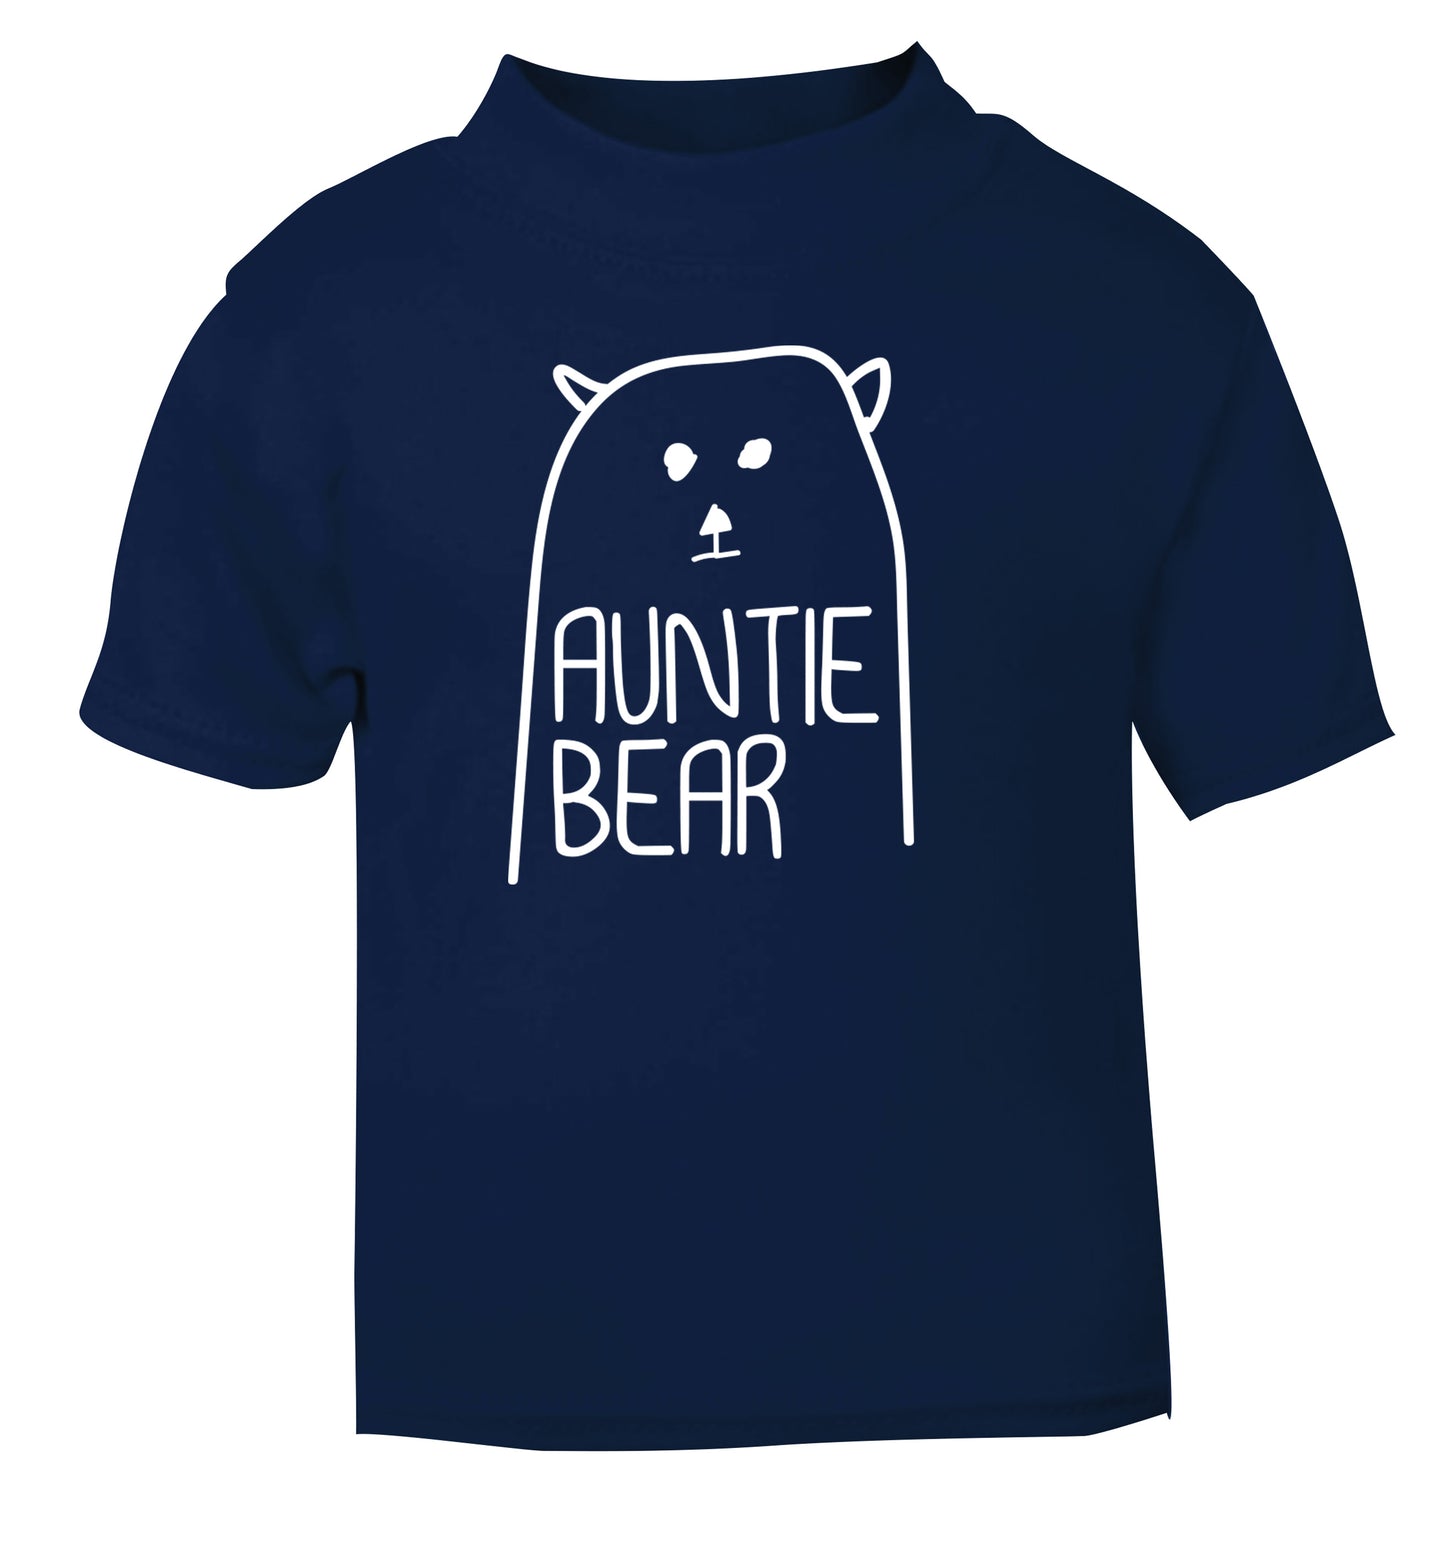 Auntie bear navy Baby Toddler Tshirt 2 Years